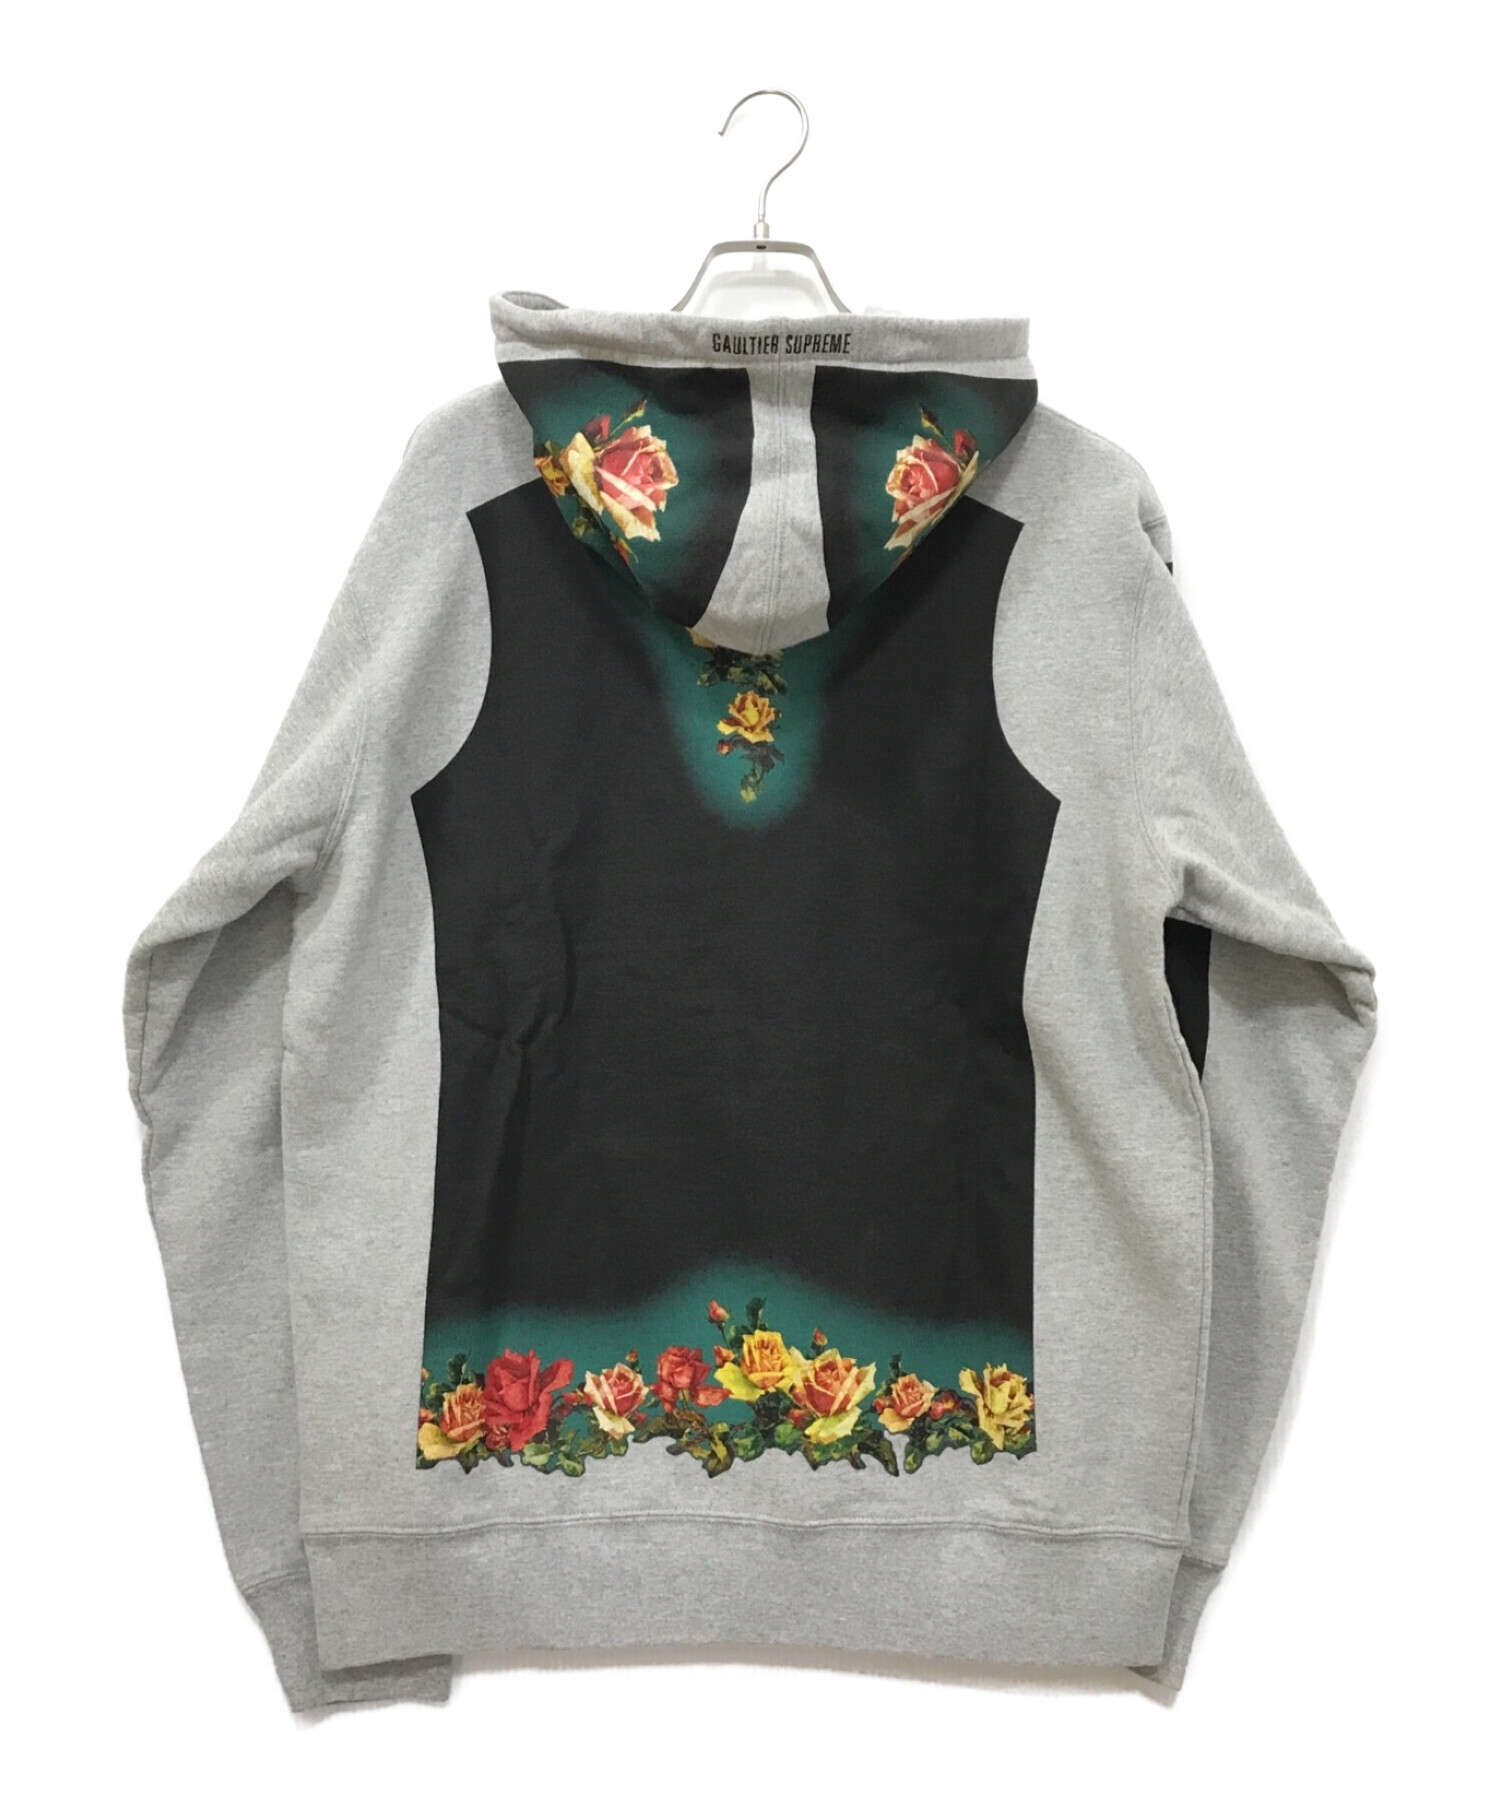 SUPREME (シュプリーム) Jean Paul GAULTIER (ジャンポールゴルチエ) Floral Print Hooded  Sweatshirt グレー サイズ:L